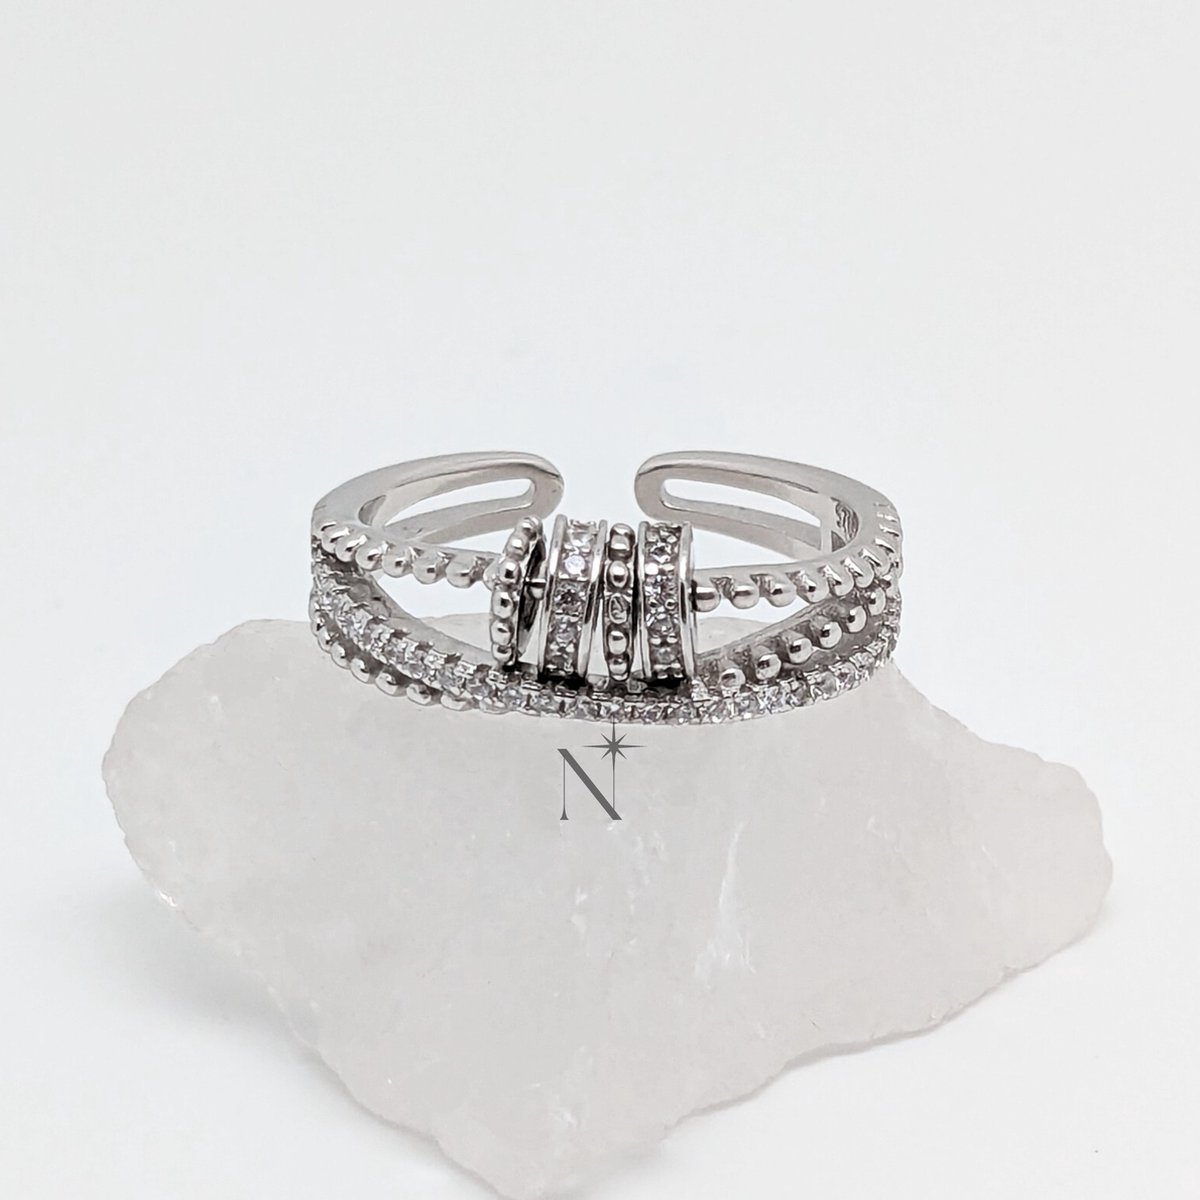 Luminora S925 Serenity Ring - Fidget Ring Zilver 925 - Anxiety Ring - Stress Ring - Anti Stress Ring - Spinner Ring - Spinning Ring - Draai Ring - Ring Zilver Dames - Zilveren Ring - Wellness Sieraden - Luminora Wellness Juwelier